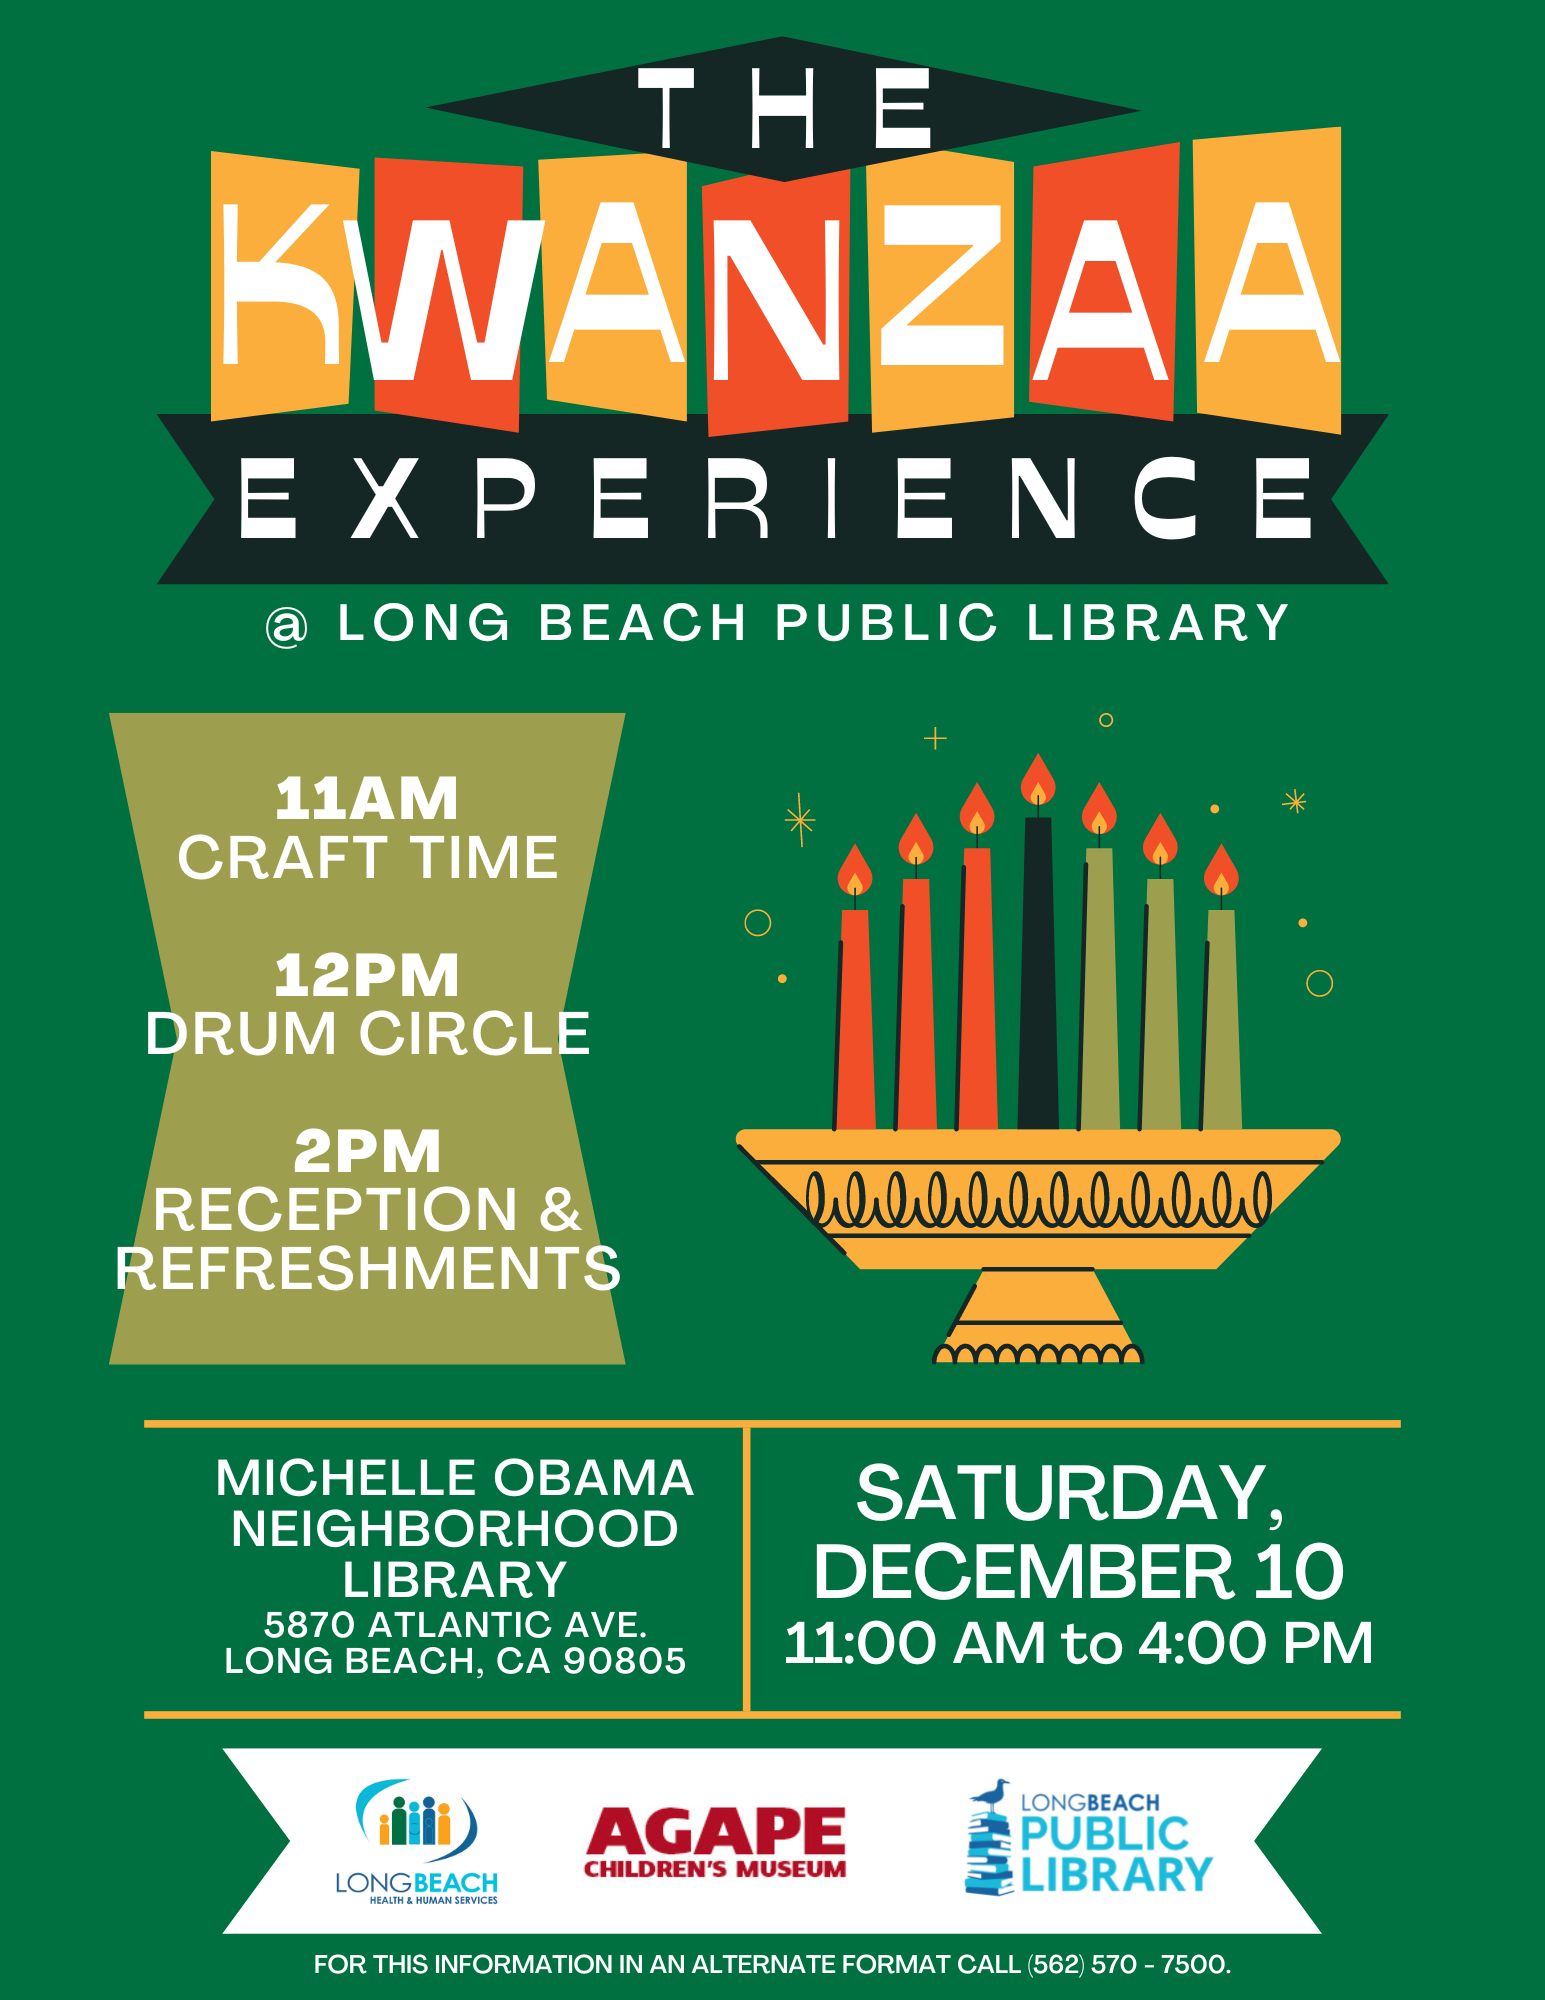 The Kwanzaa Experience